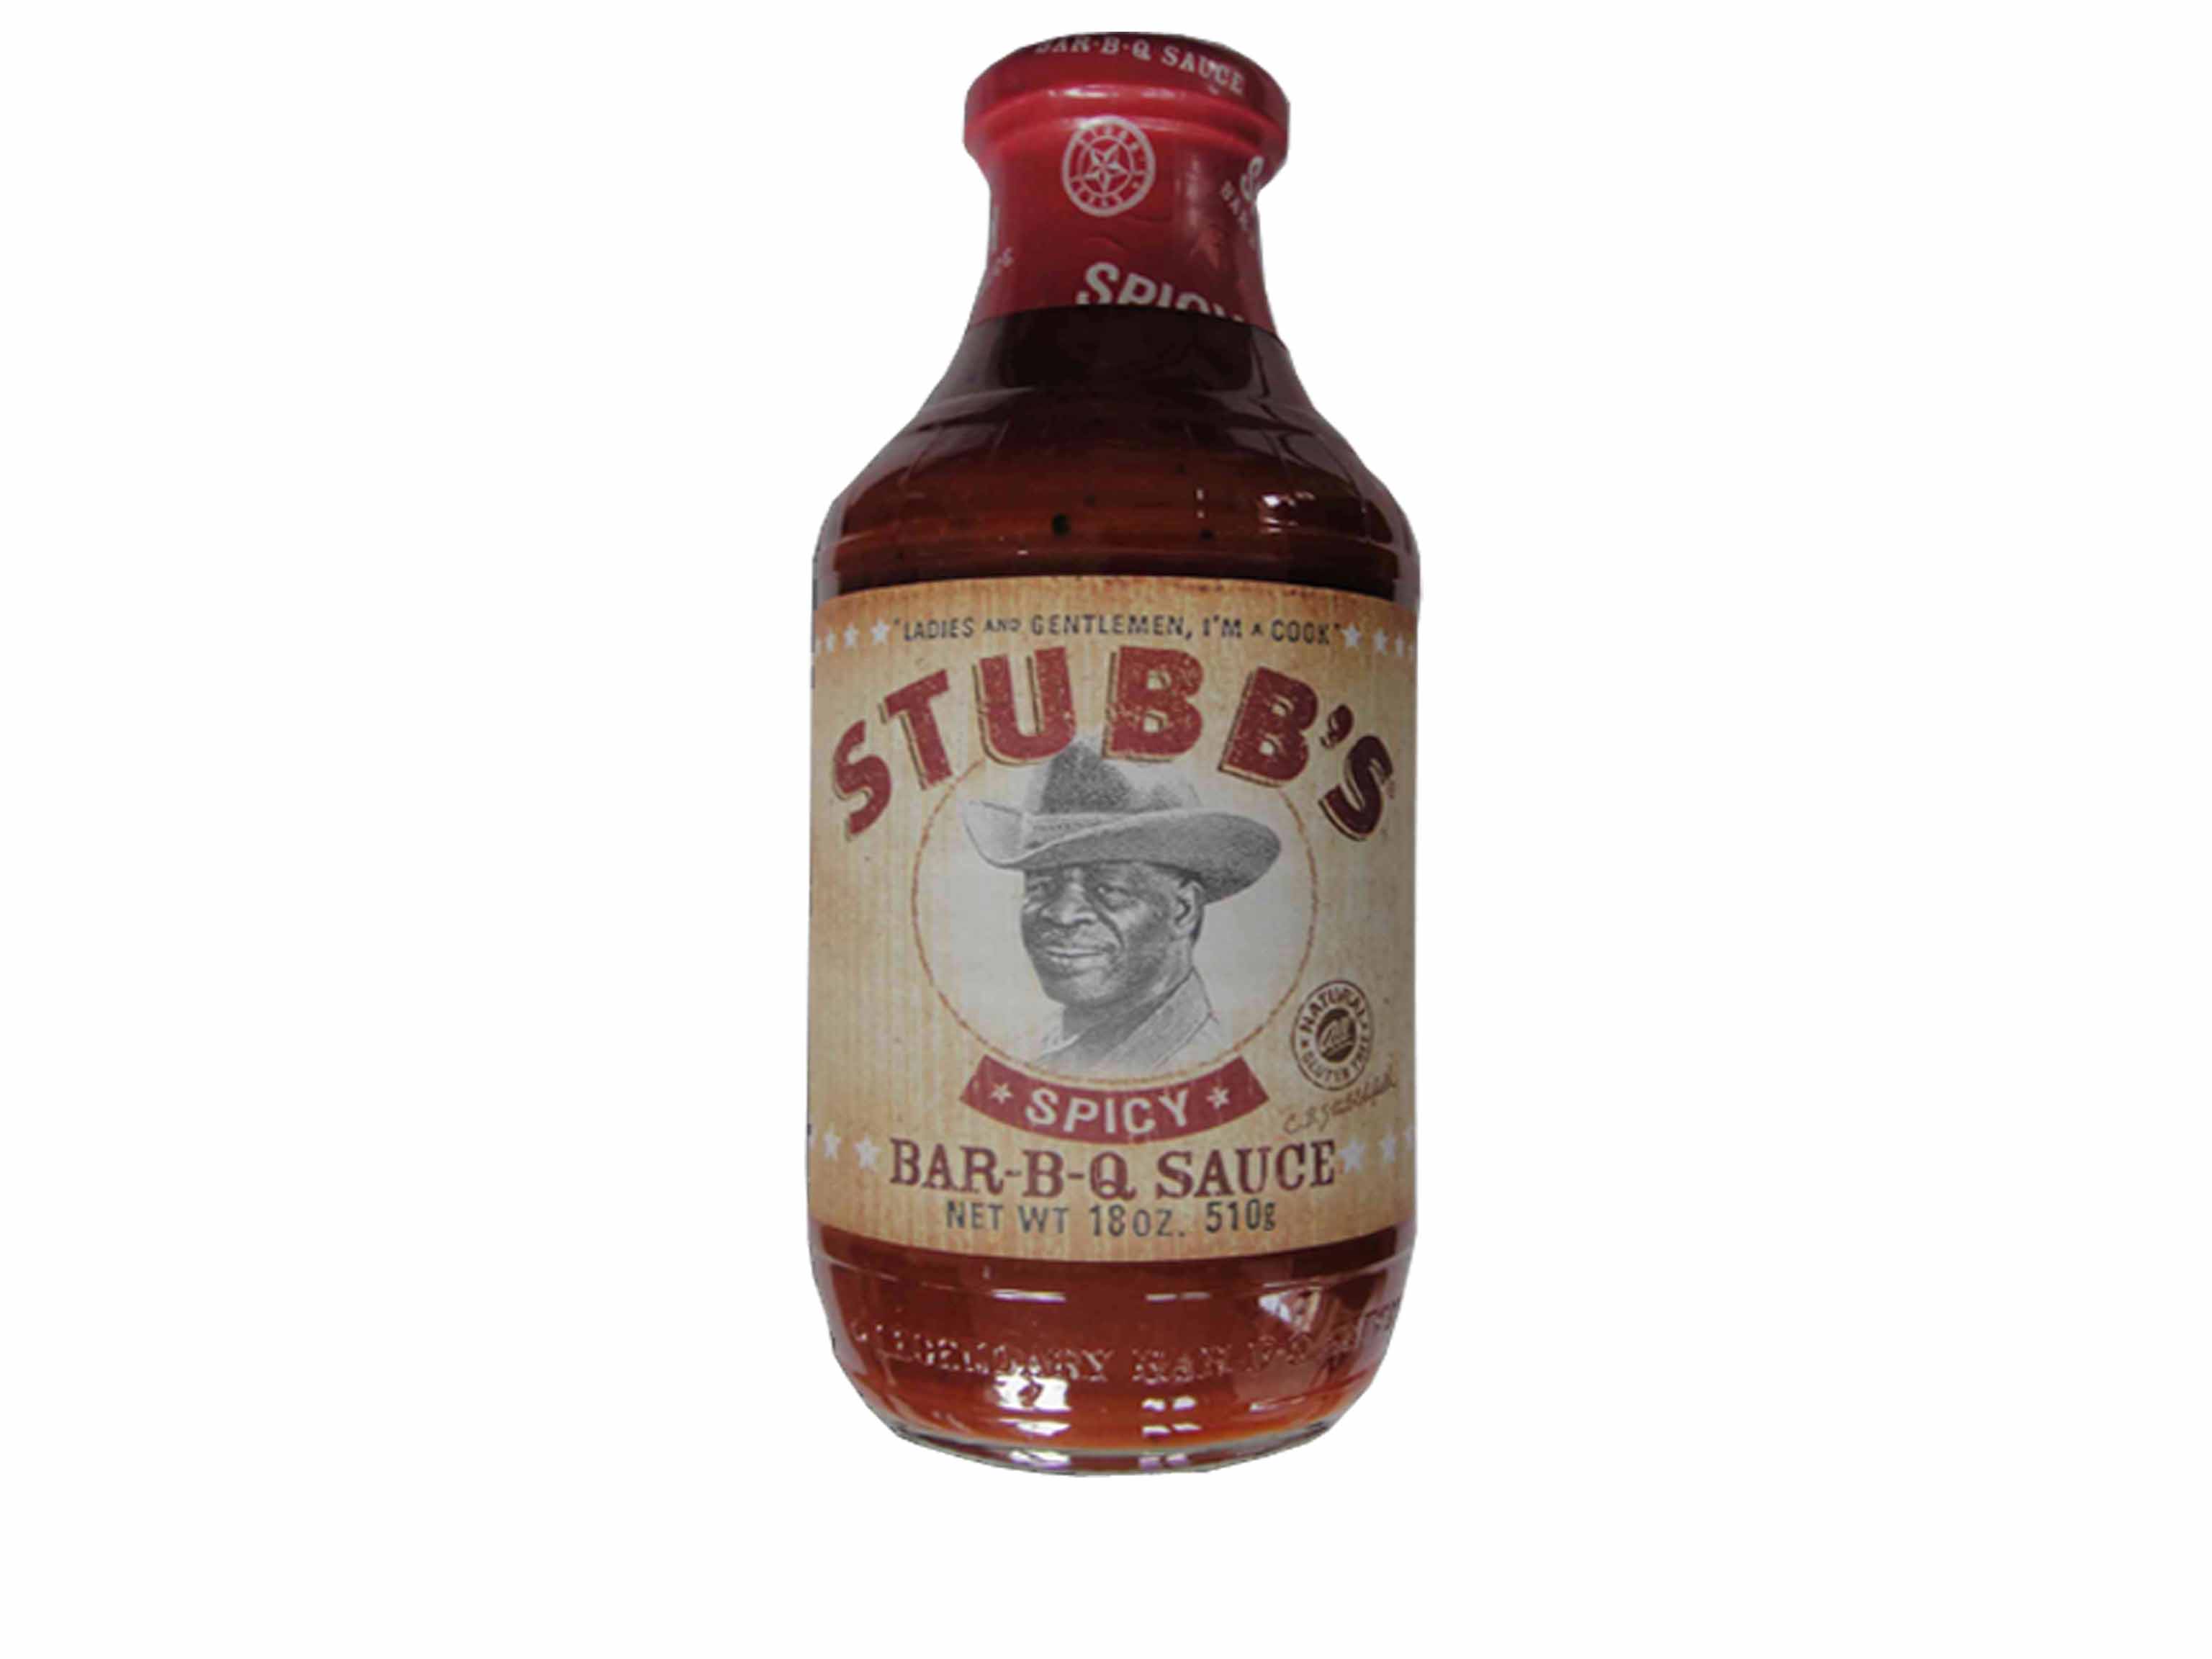 STUBB‘S Spicy Sauce Grillsauce